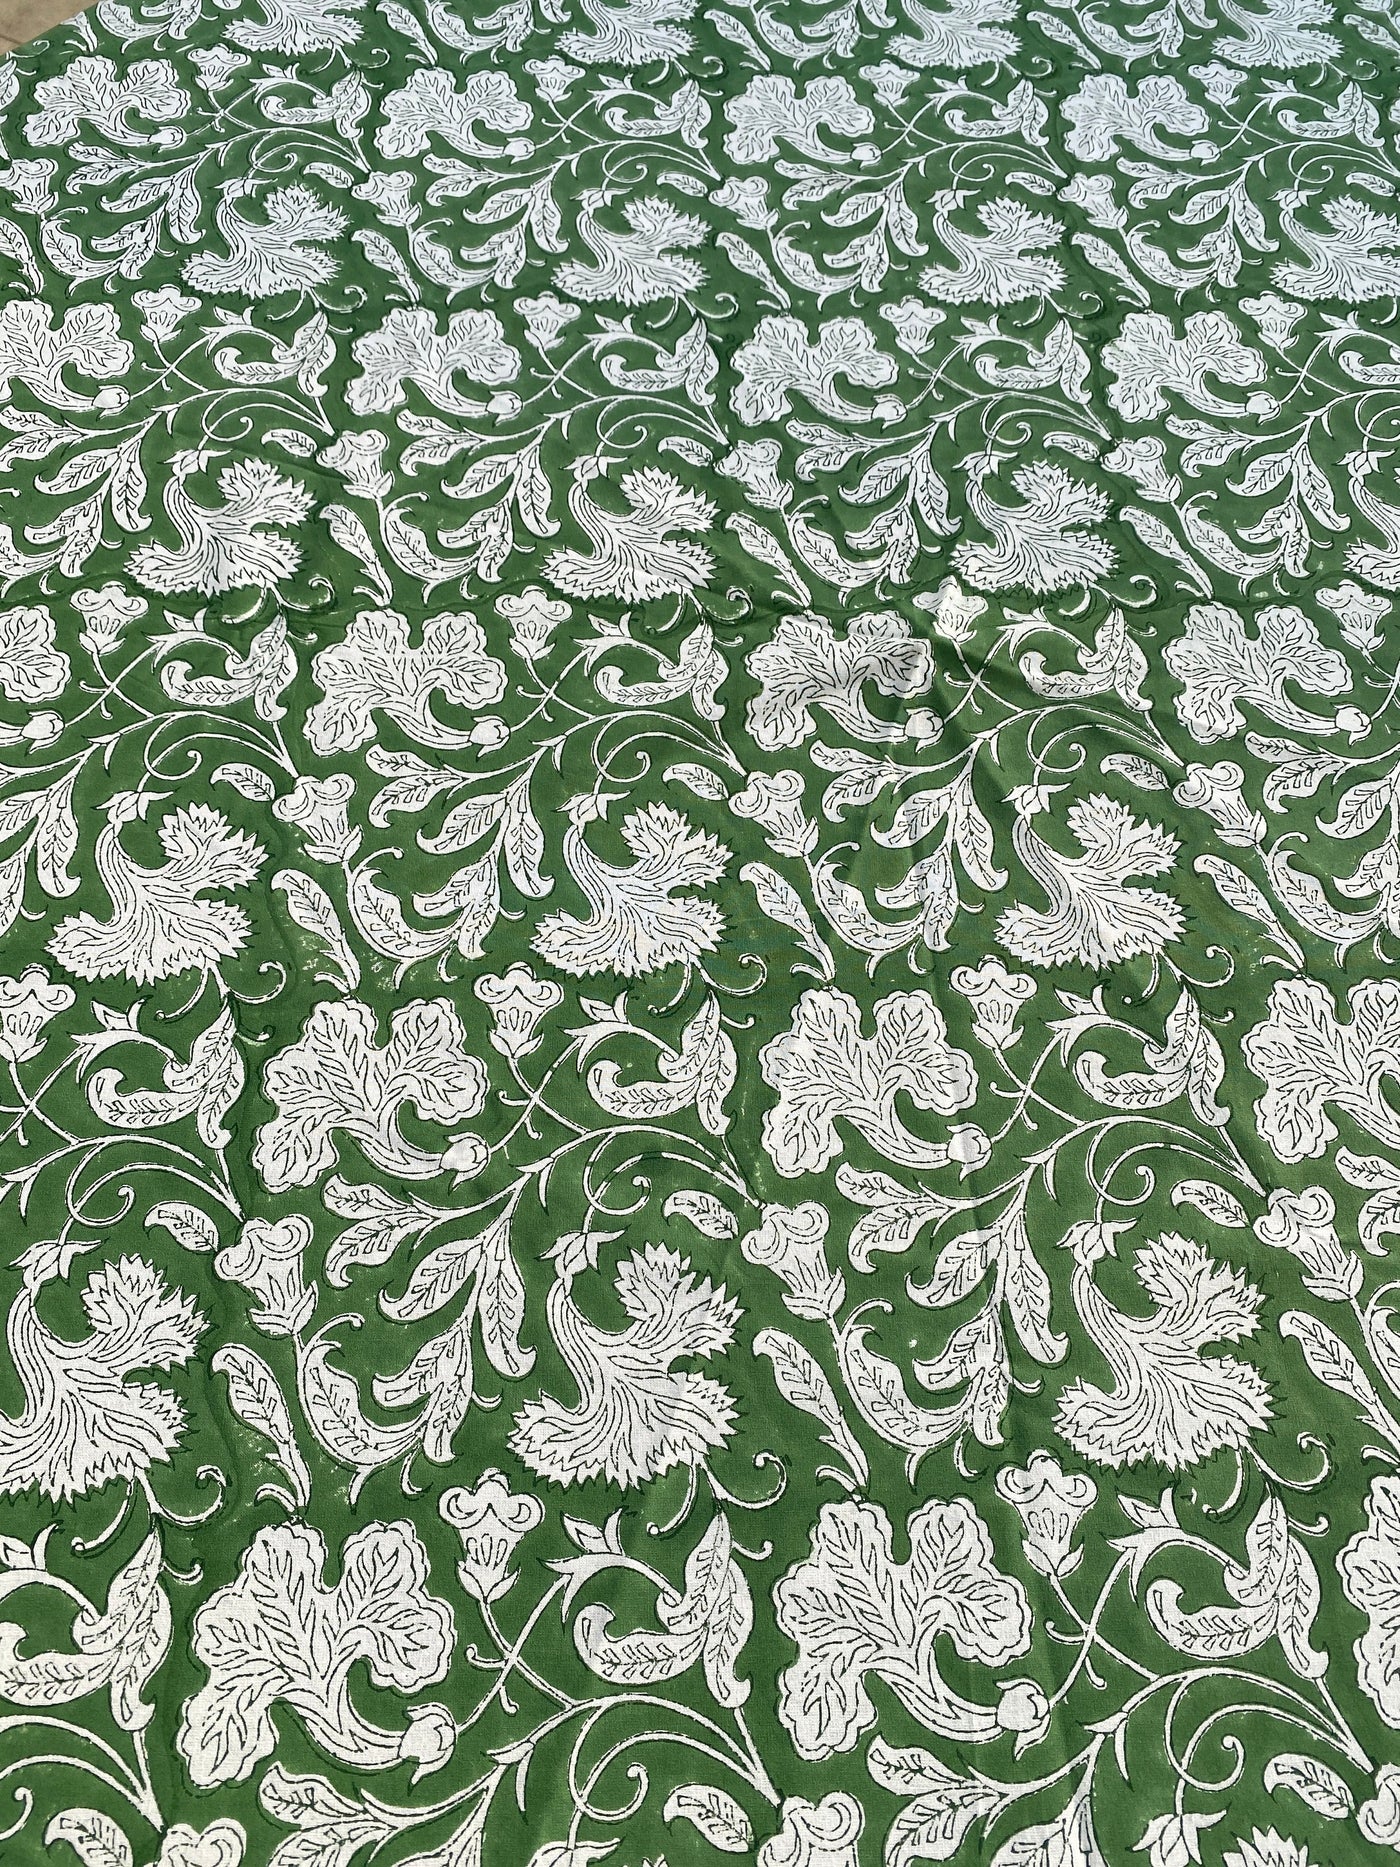 Fabricrush Pantone Artichoke green Round Tablecloth, Indian Floral Hand Block Printed Cotton Cloth Table cover, Wedding Home Decor Event Table Linen